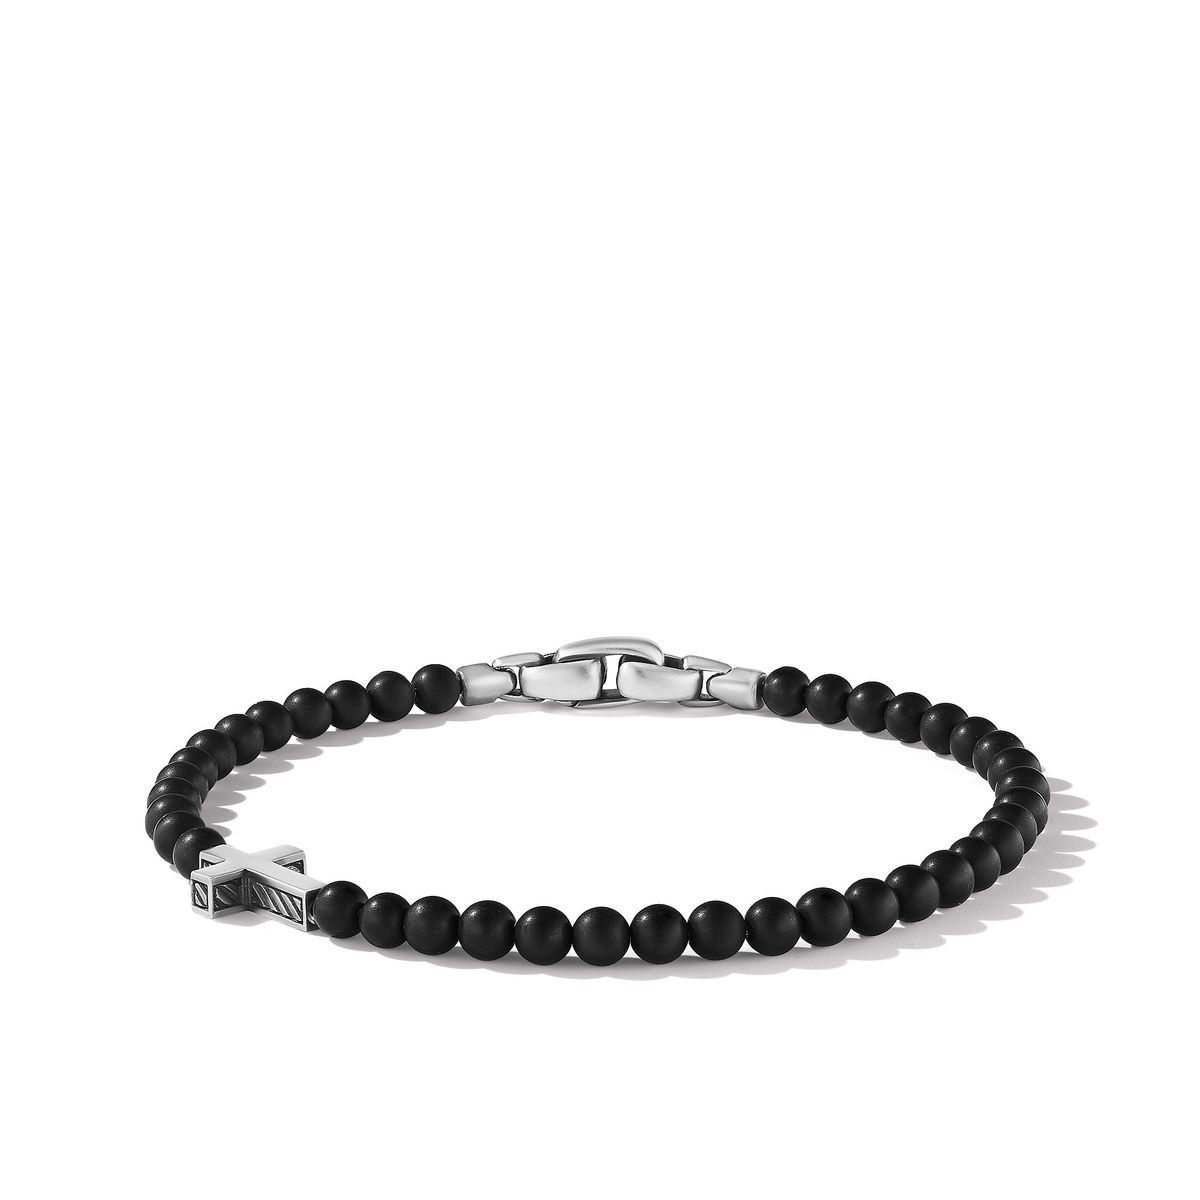 Men's David Yurman Spiritual Beads Cross Station Bracelet with Black Onyx | Size Extra Small